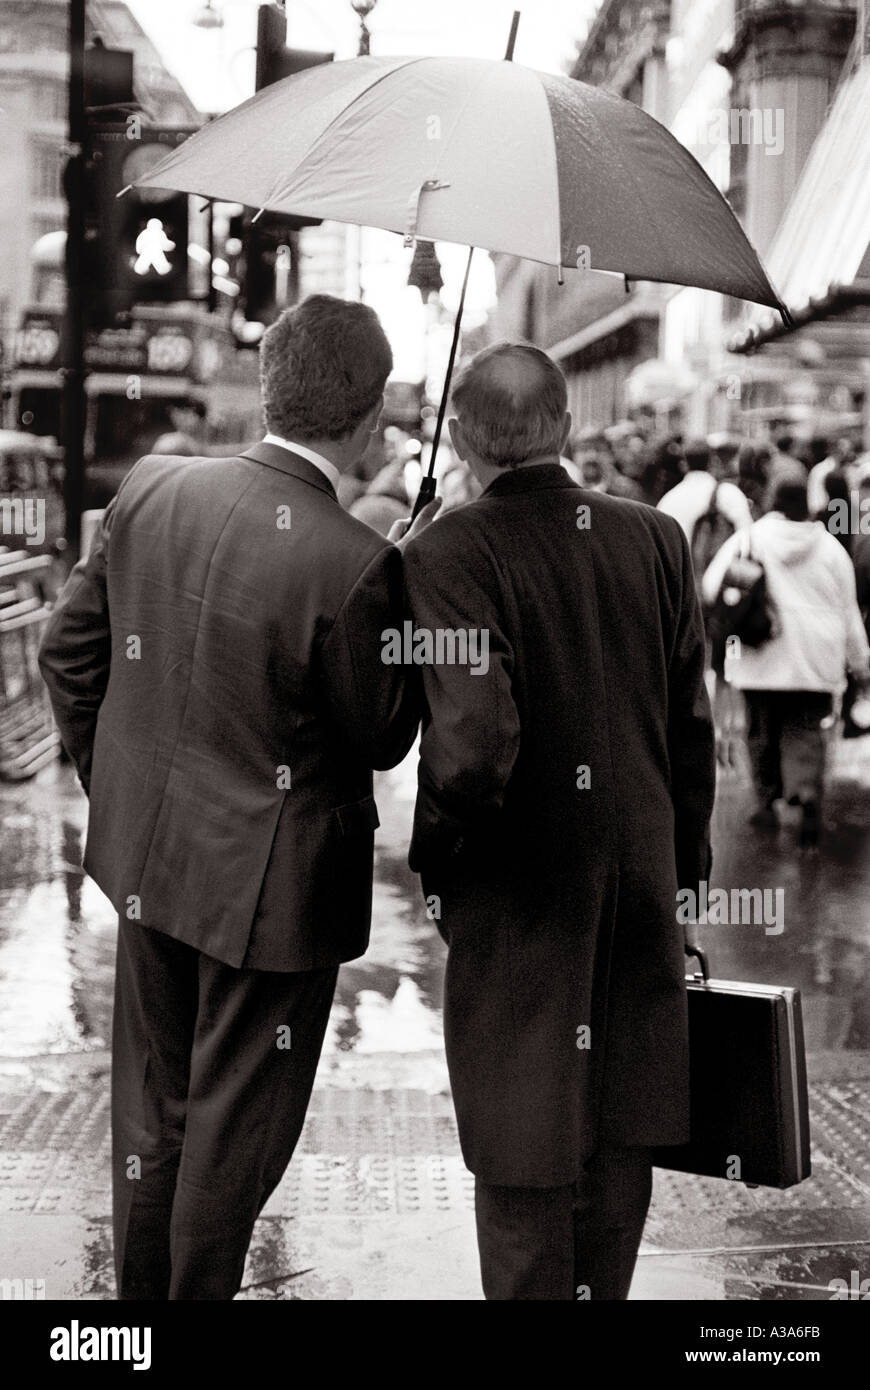 Two businessmen sharing  an umbrella, Oxford Street, London, UK. Stock Photo